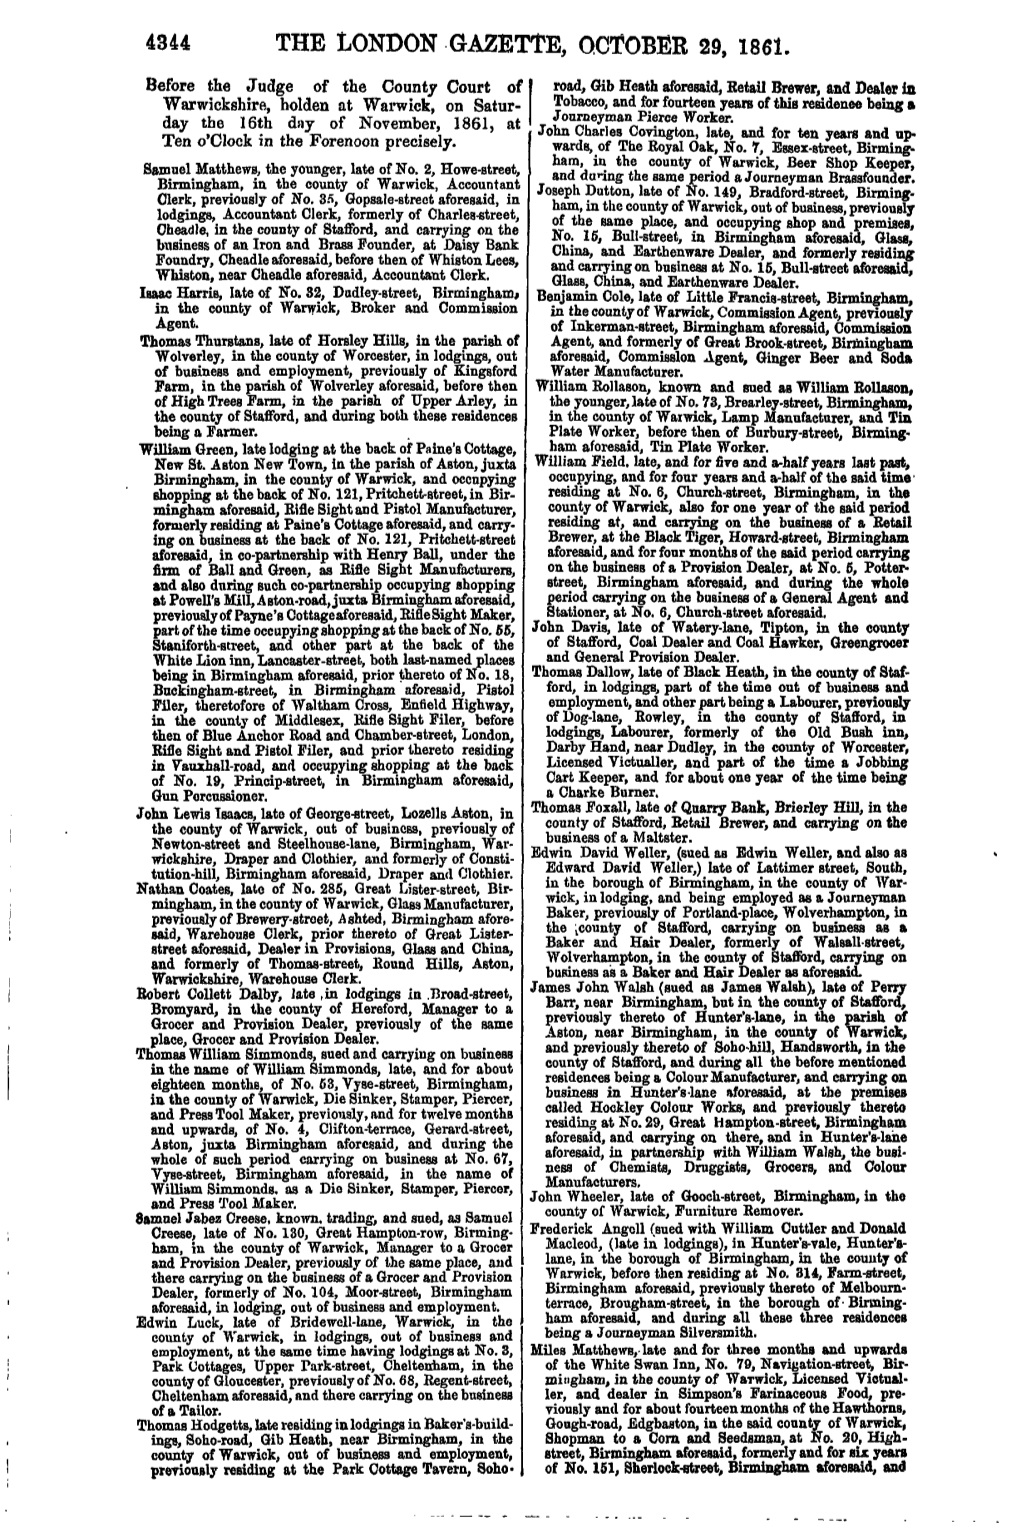 The London Gazette, October 29, 1861